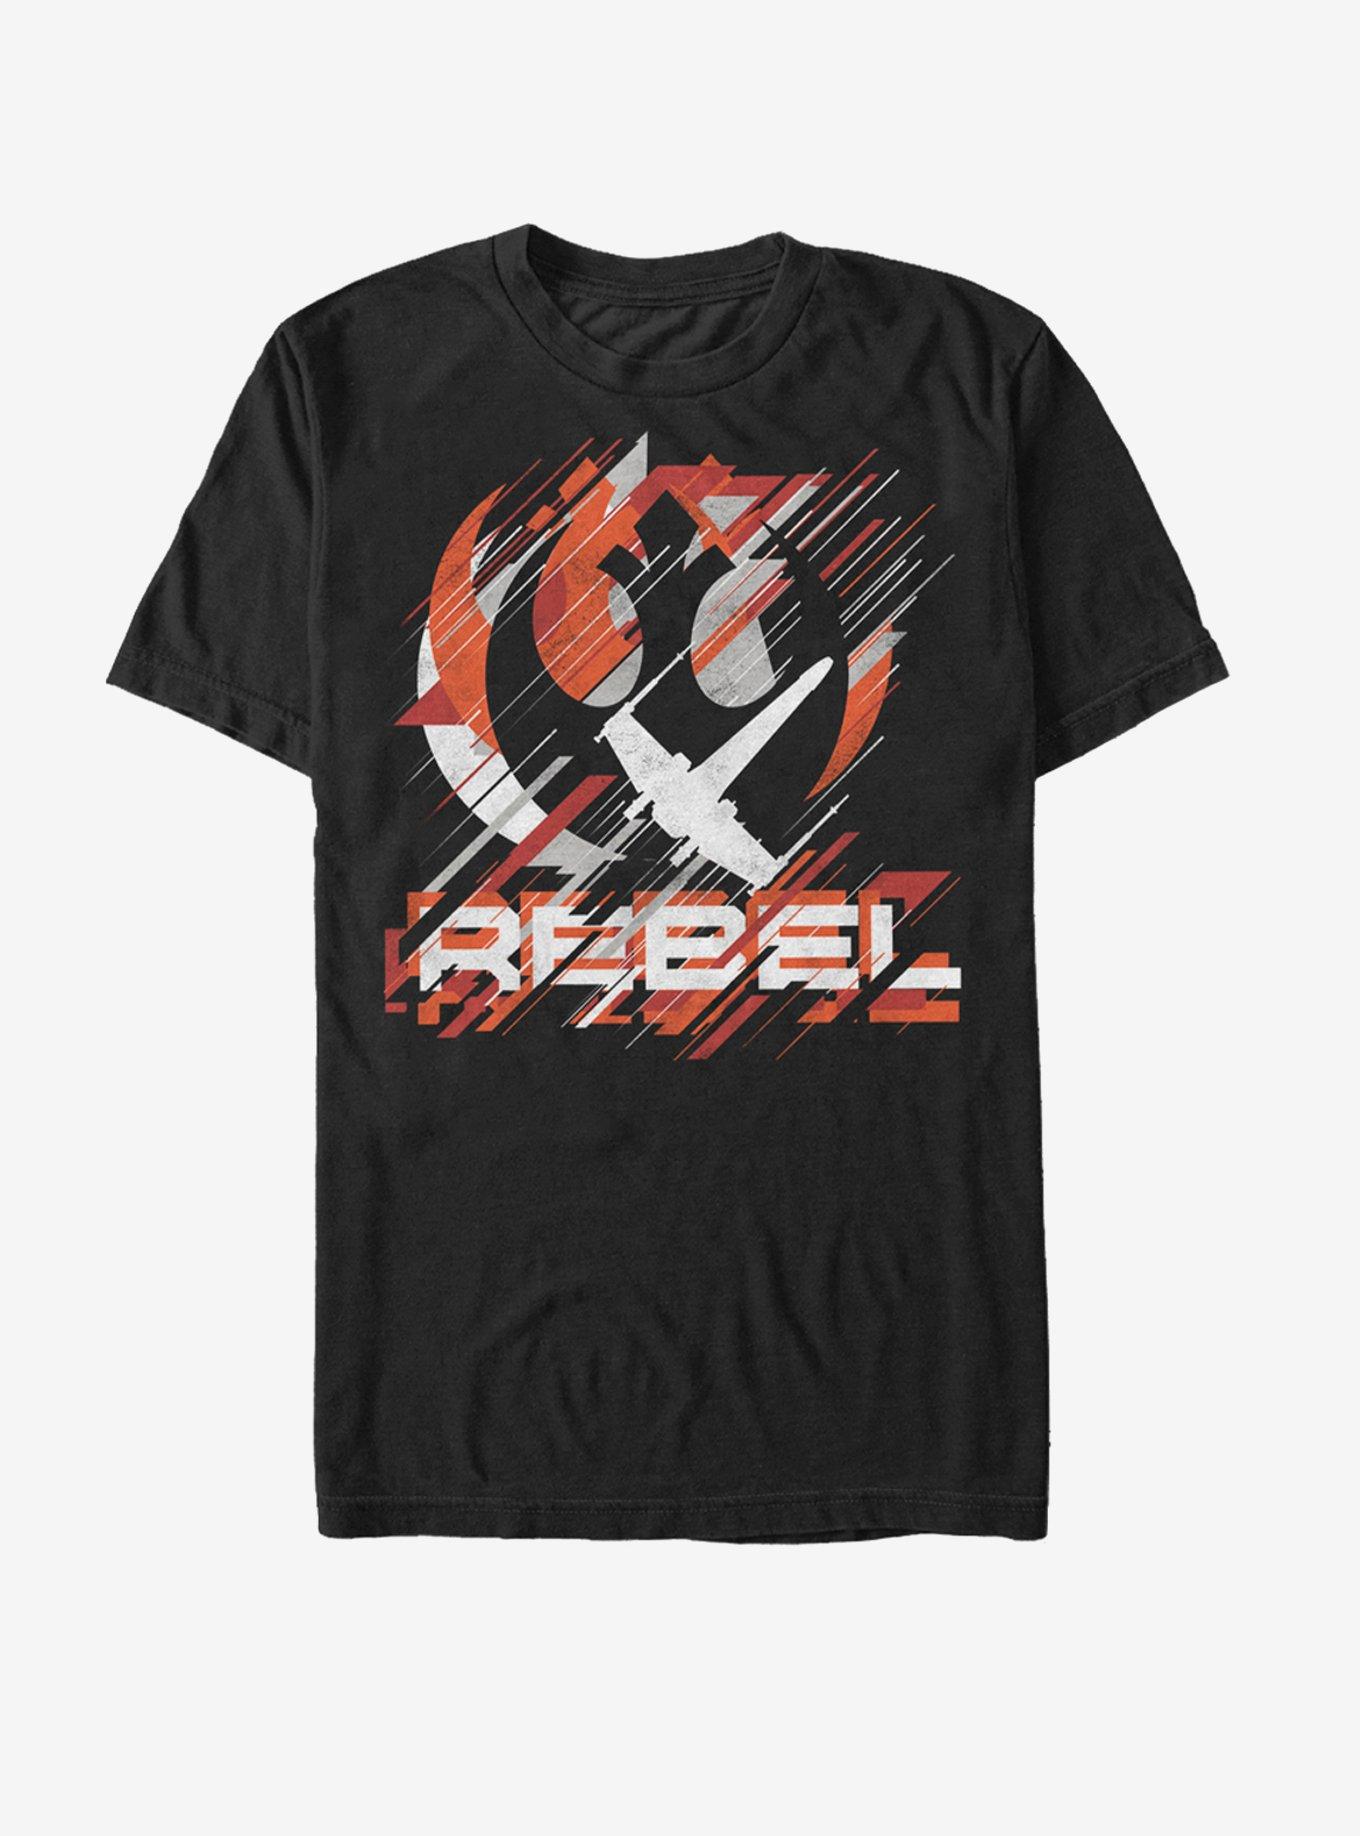 Star Wars Rebel Crest Streaks T-Shirt